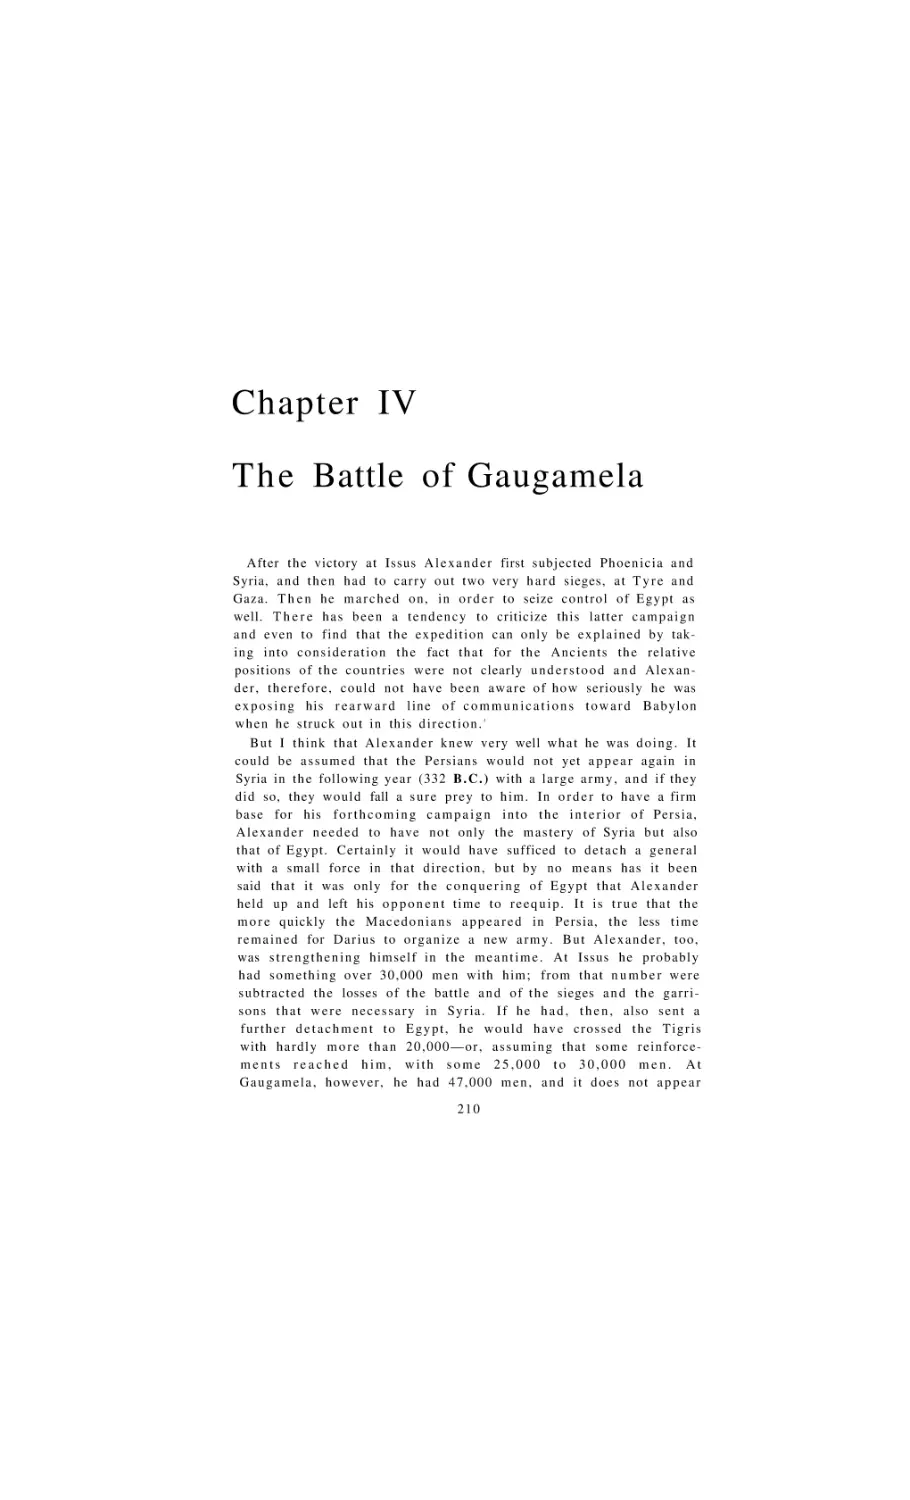 The Battle of Gaugamela